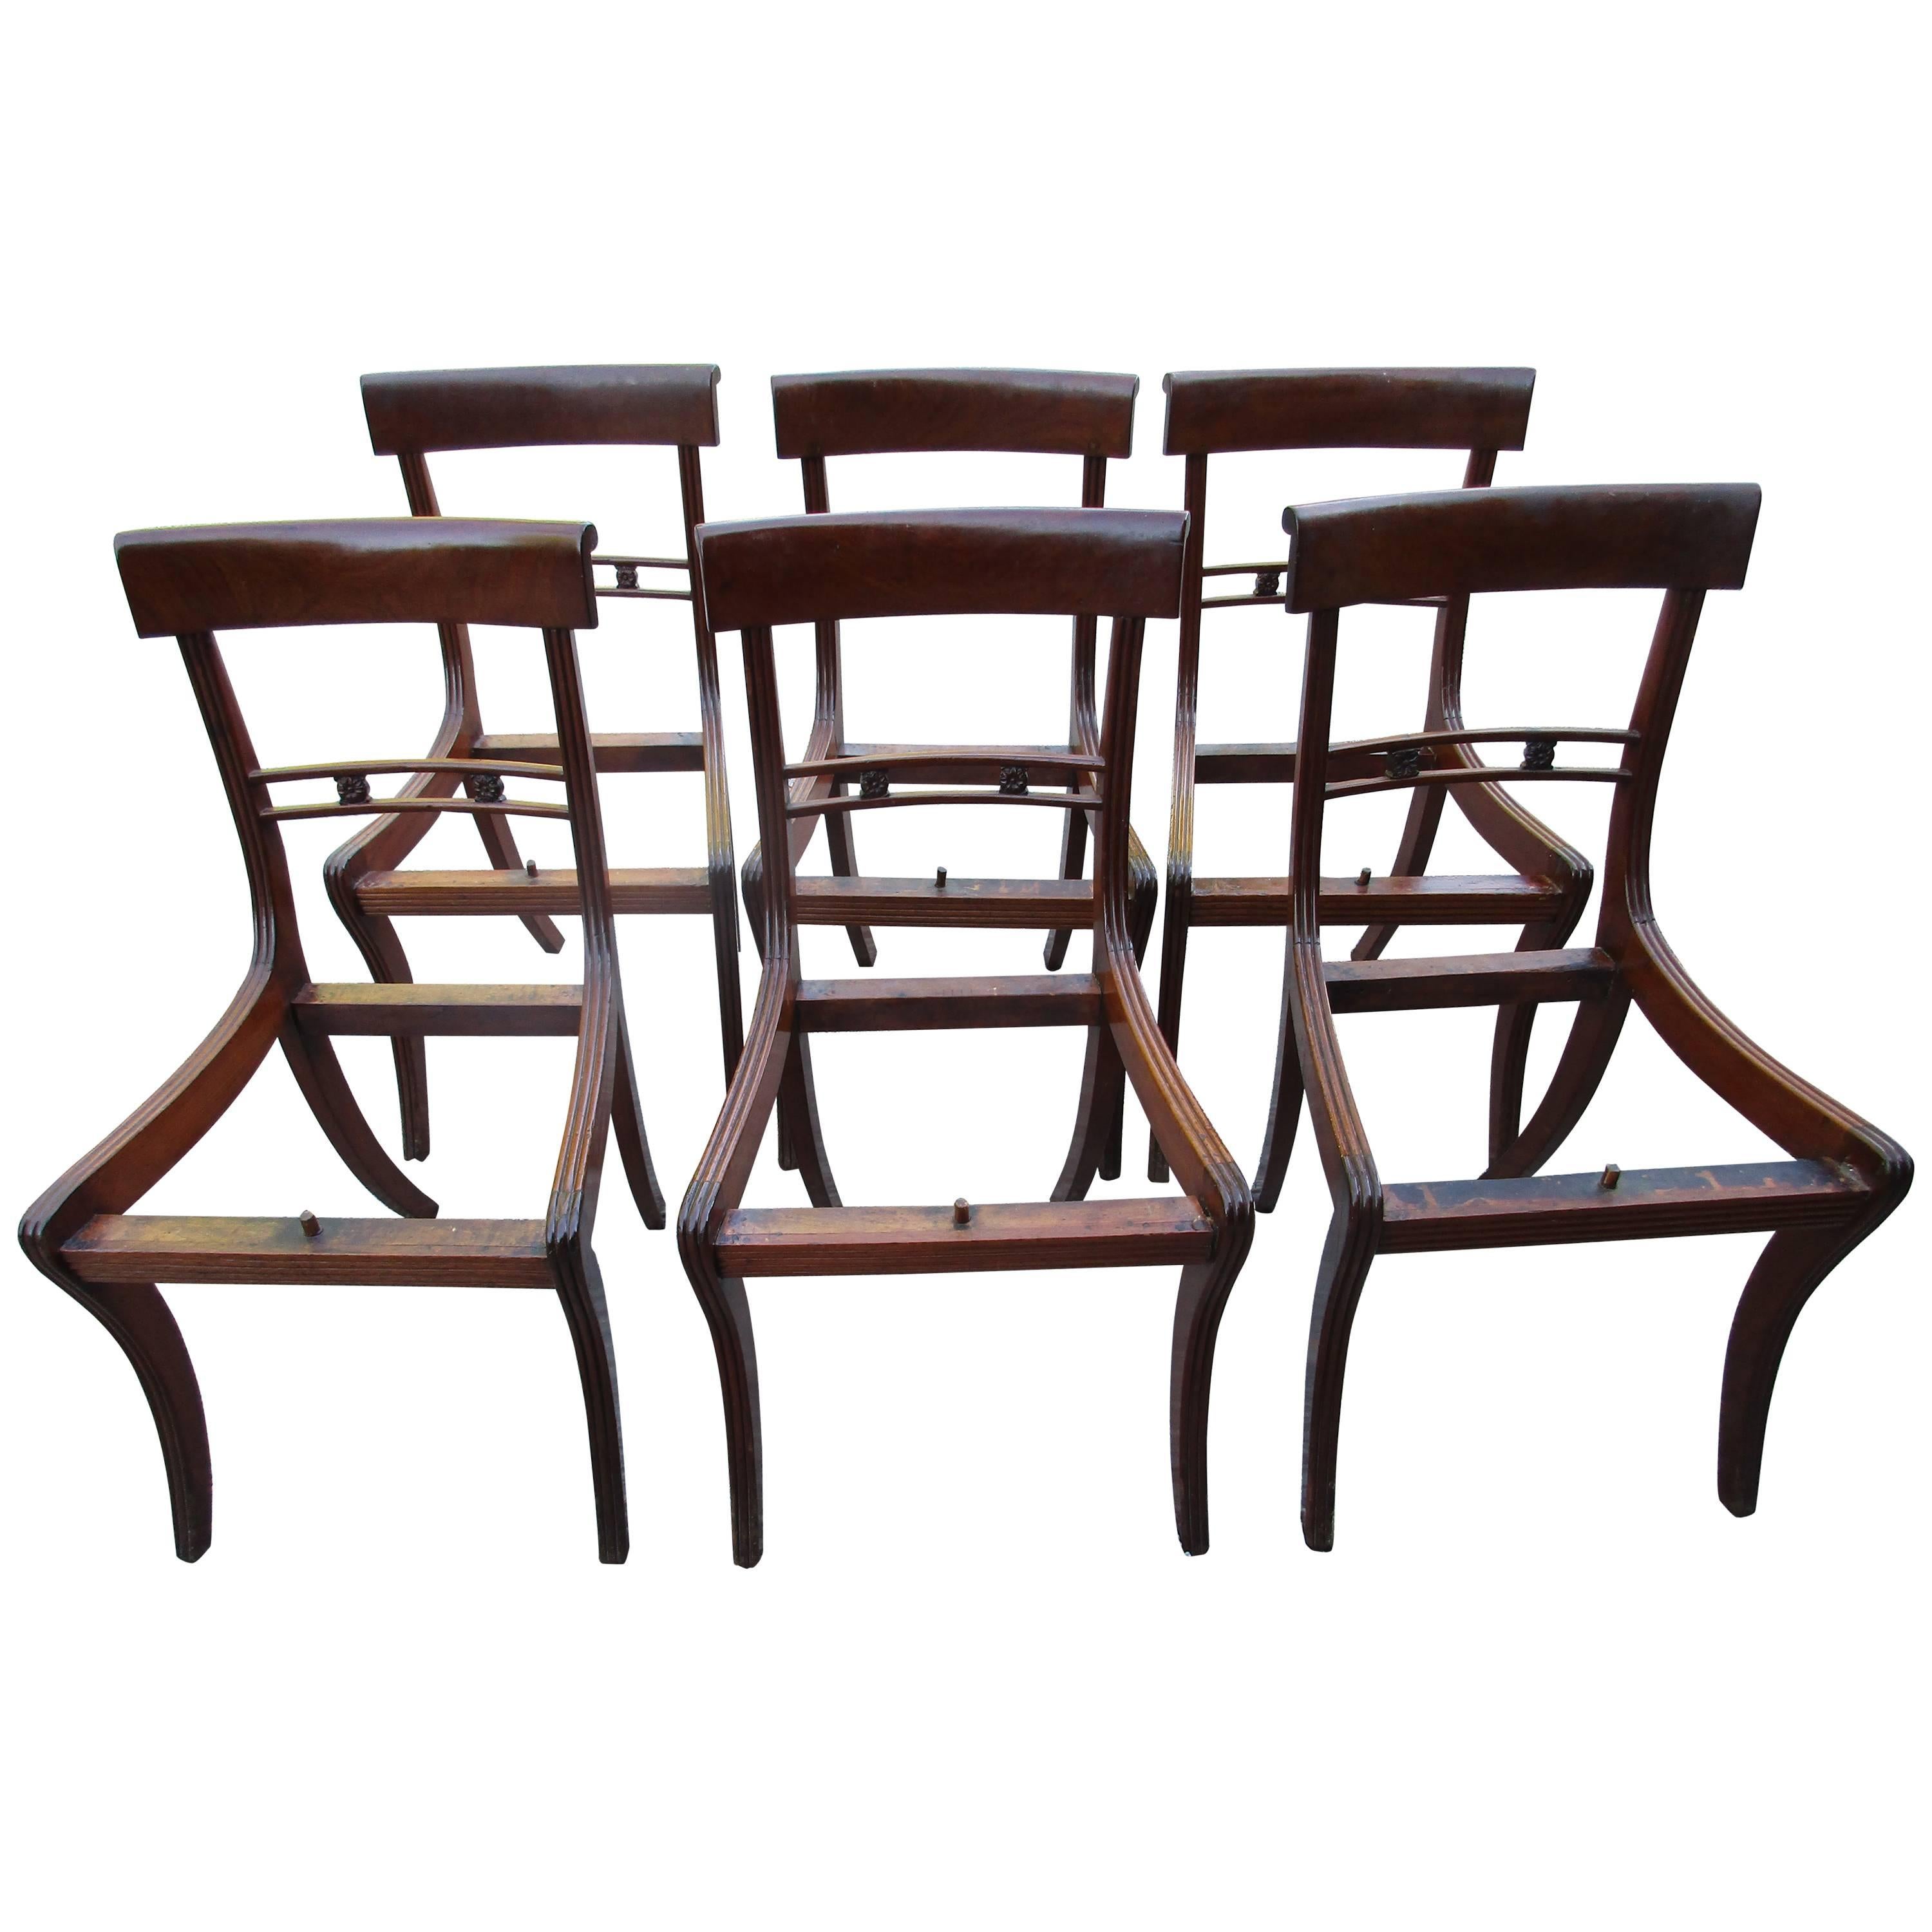 Six Period Regency Mahogany Chairs